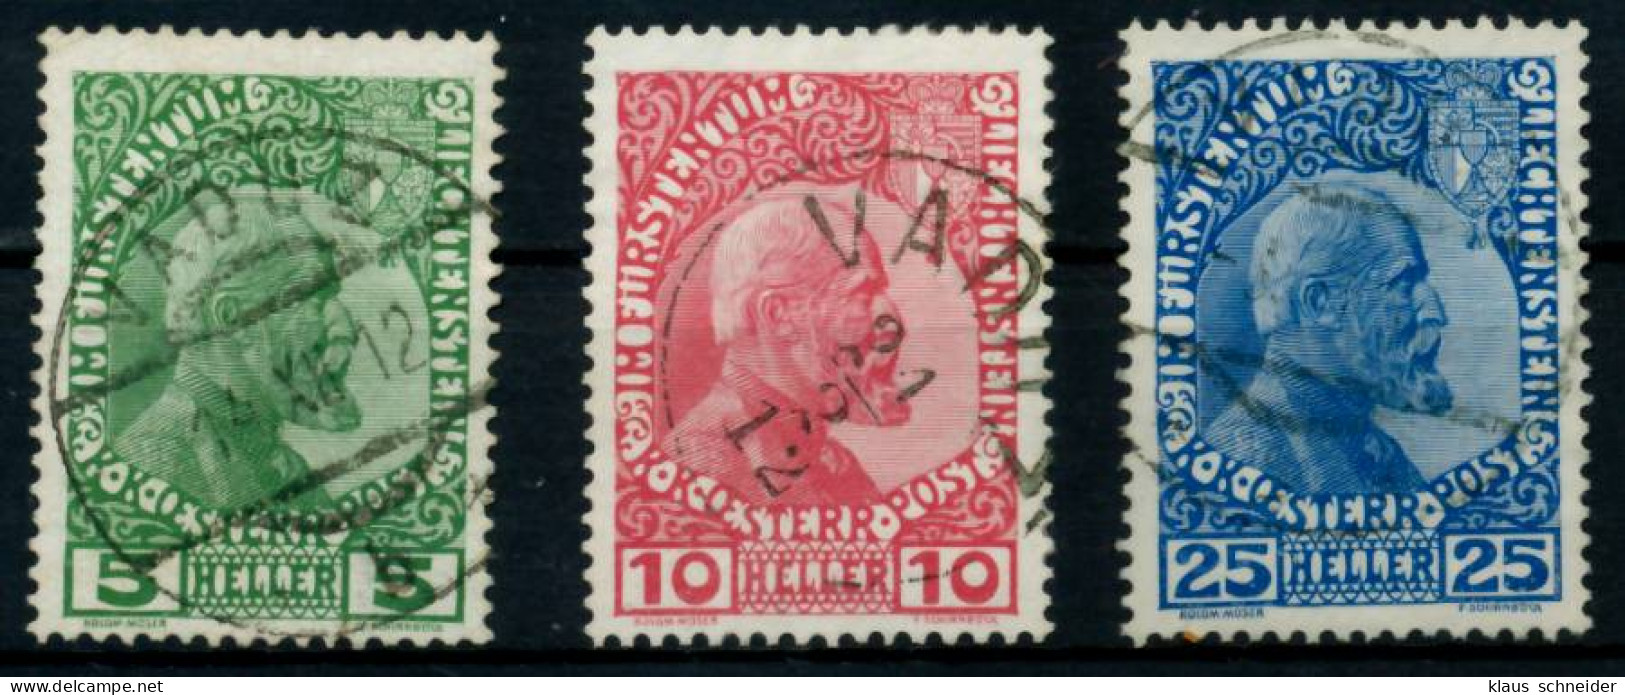 LIECHTENSTEIN 1912 Nr 1x-3x Zentrisch Gestempelt X6A8D56 - Used Stamps